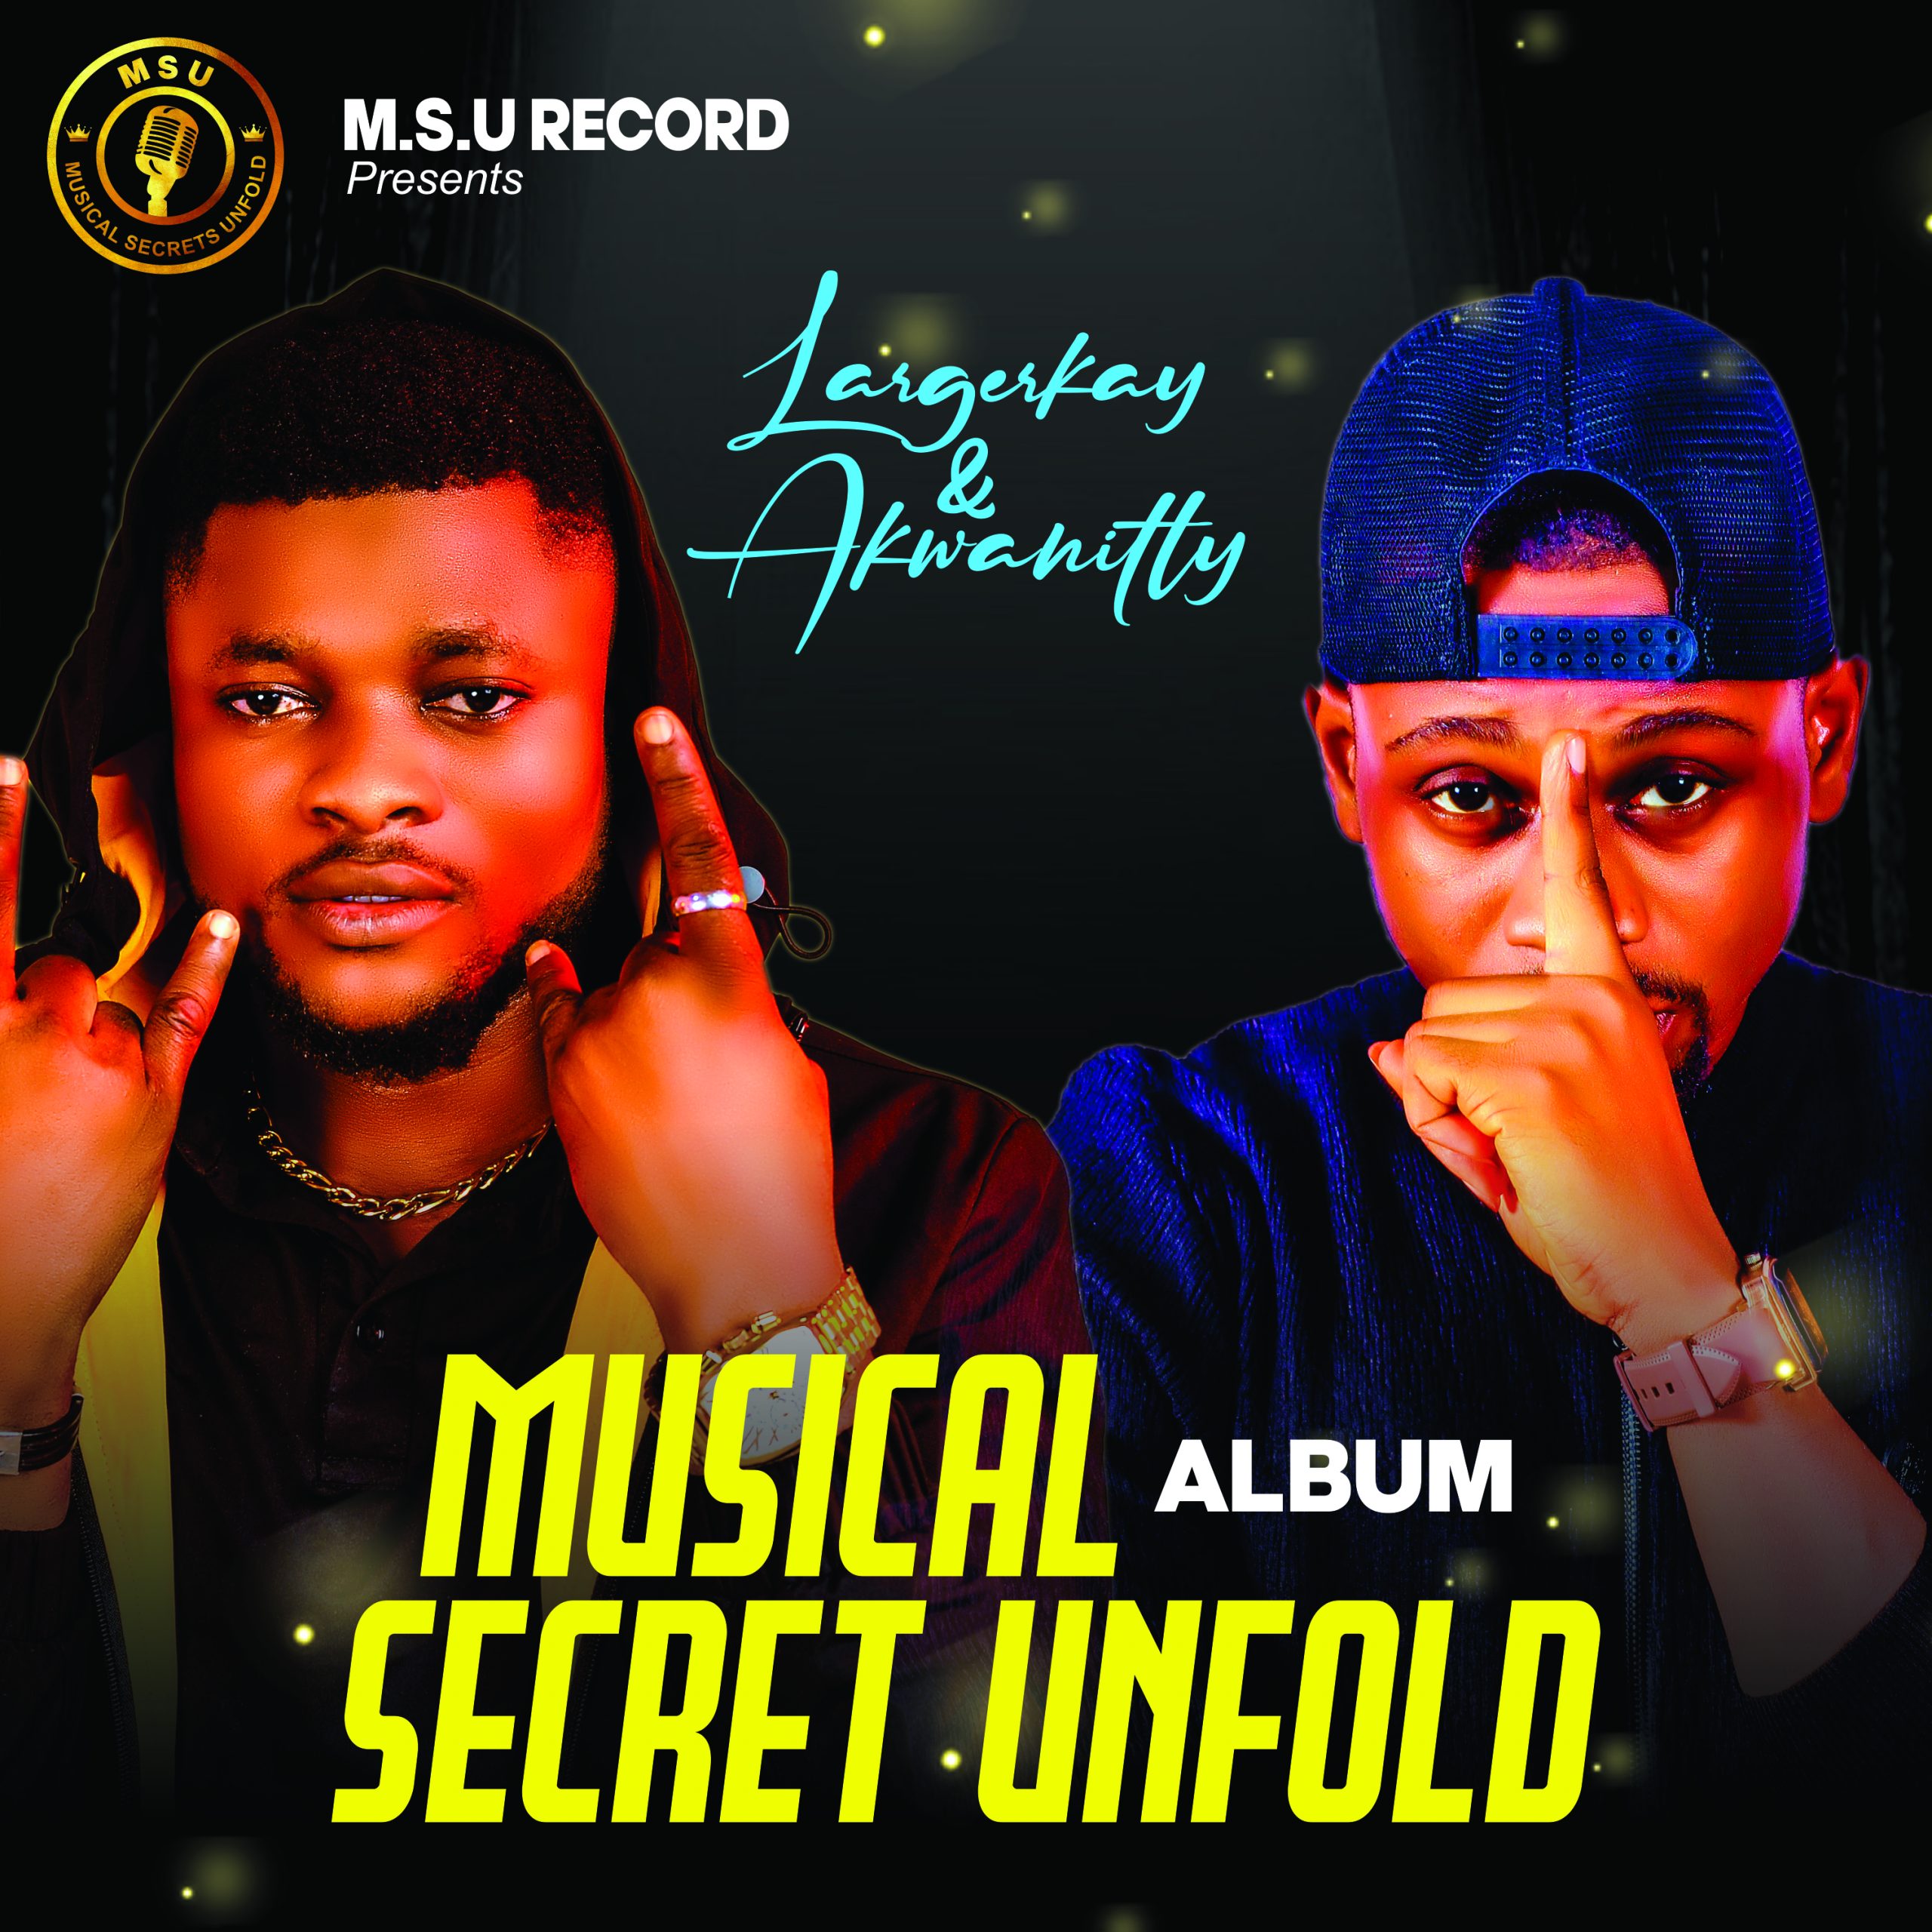 LargeKay & AkwaNitty – Musical Secret Unfold (Album)